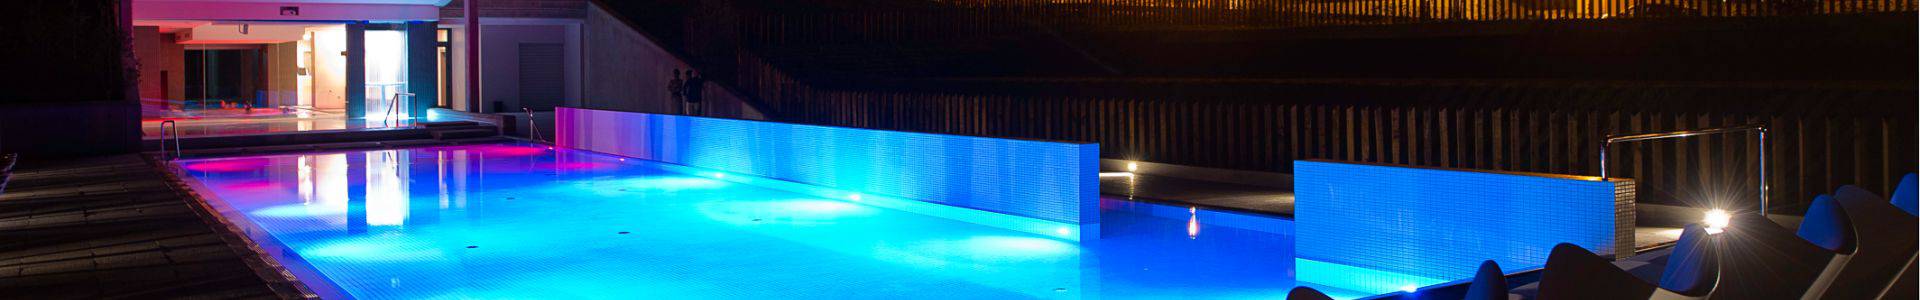 Gran Hotel Las Caldas by blau hotels - Asturias - 